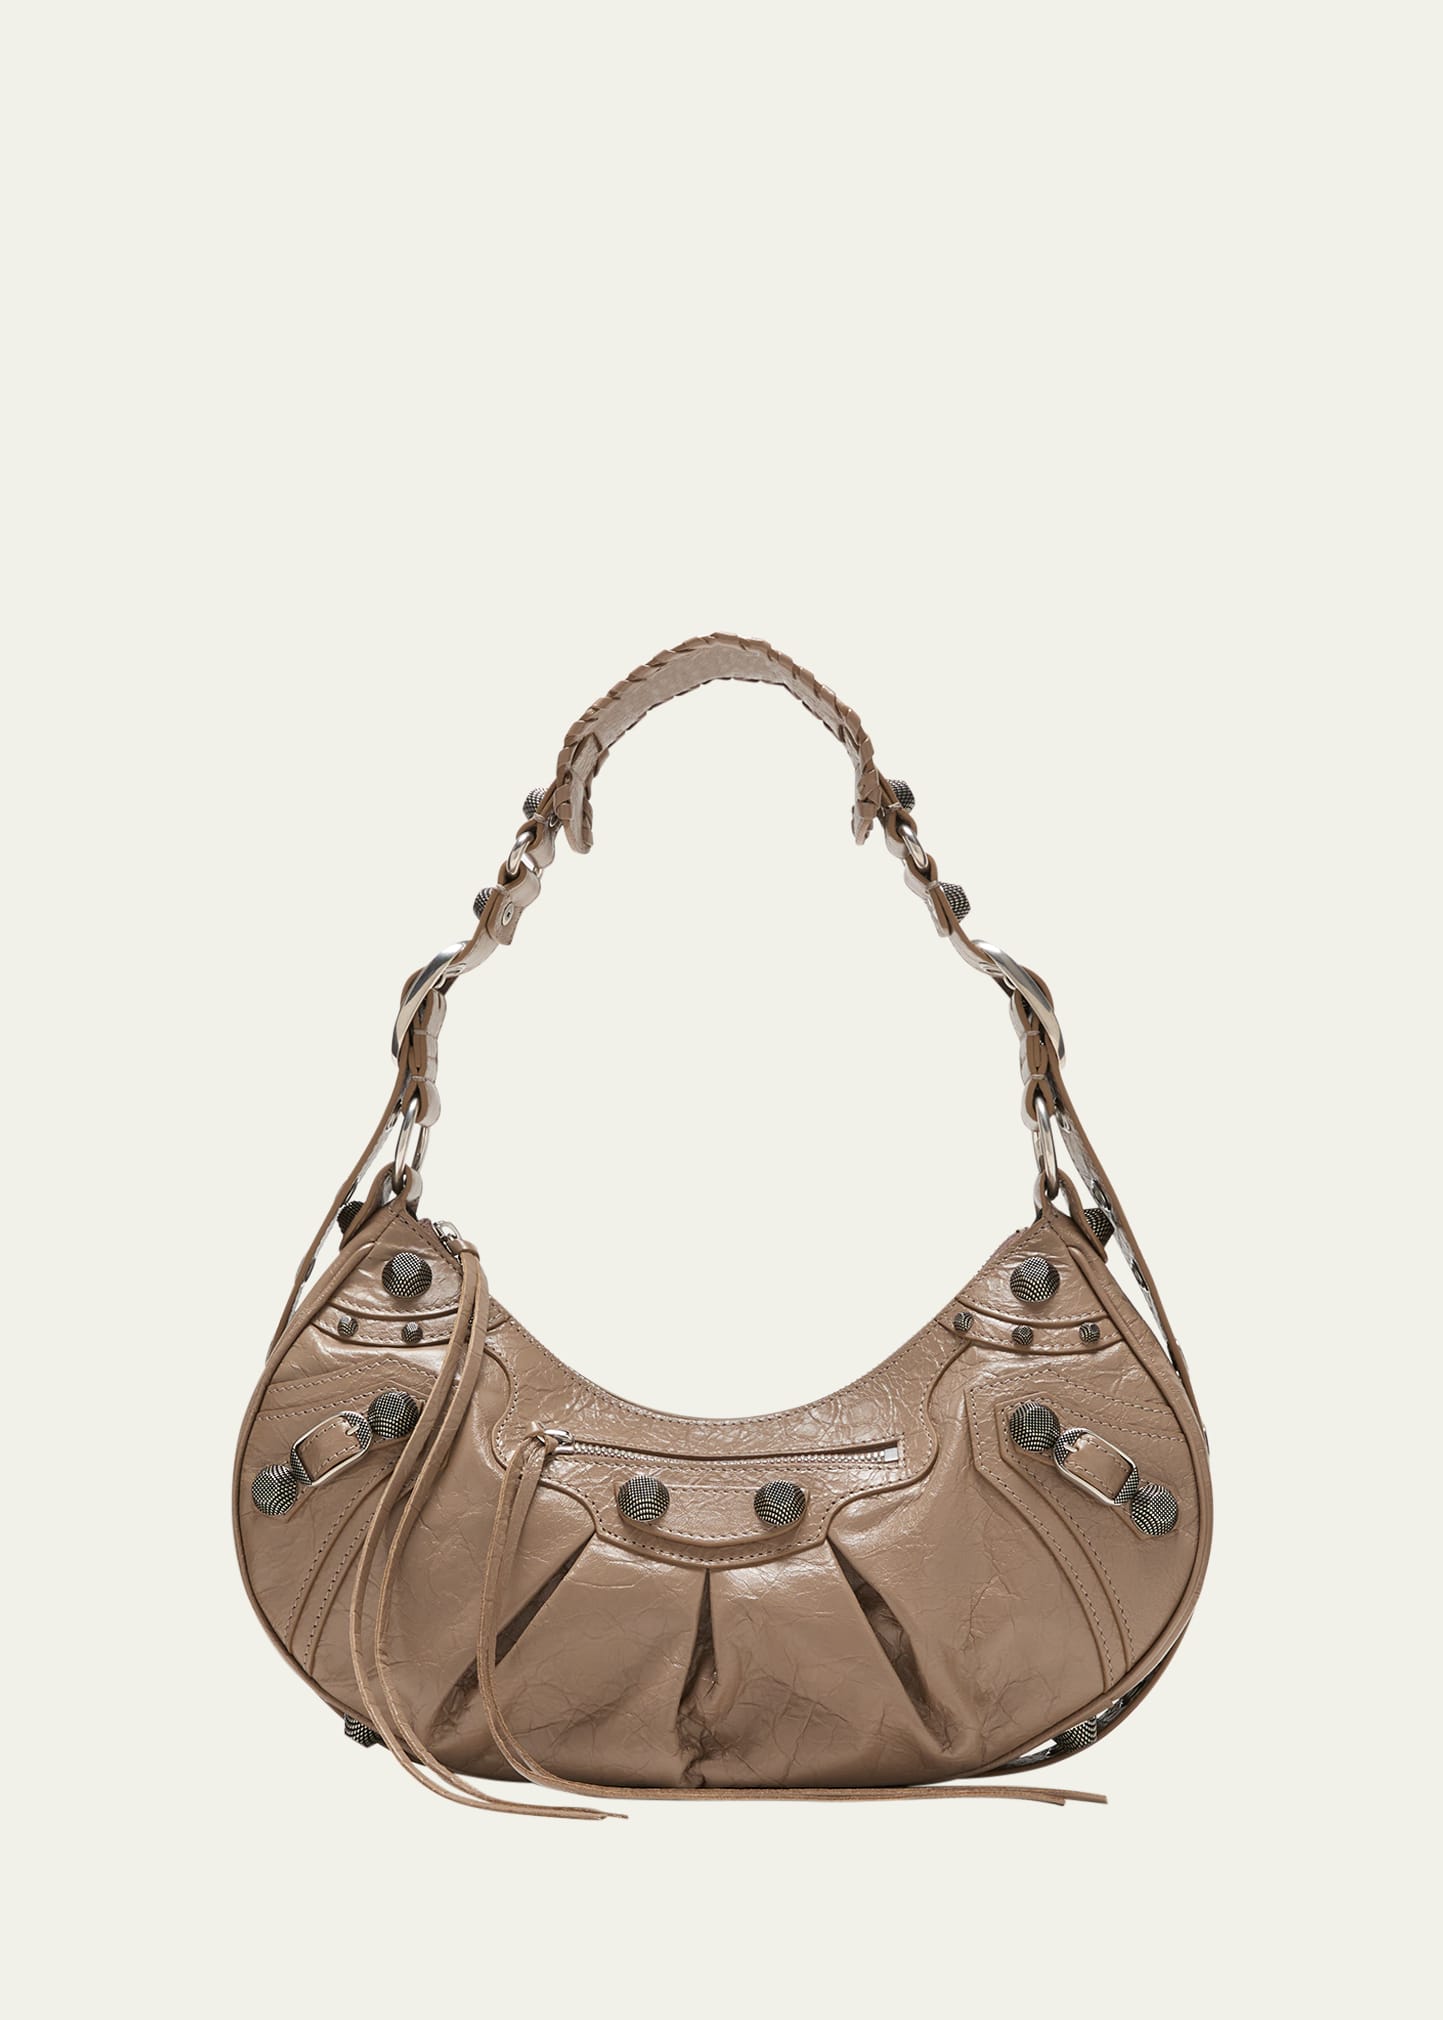 Balenciaga Cagole Studded Texture Leather Shoulder Bag